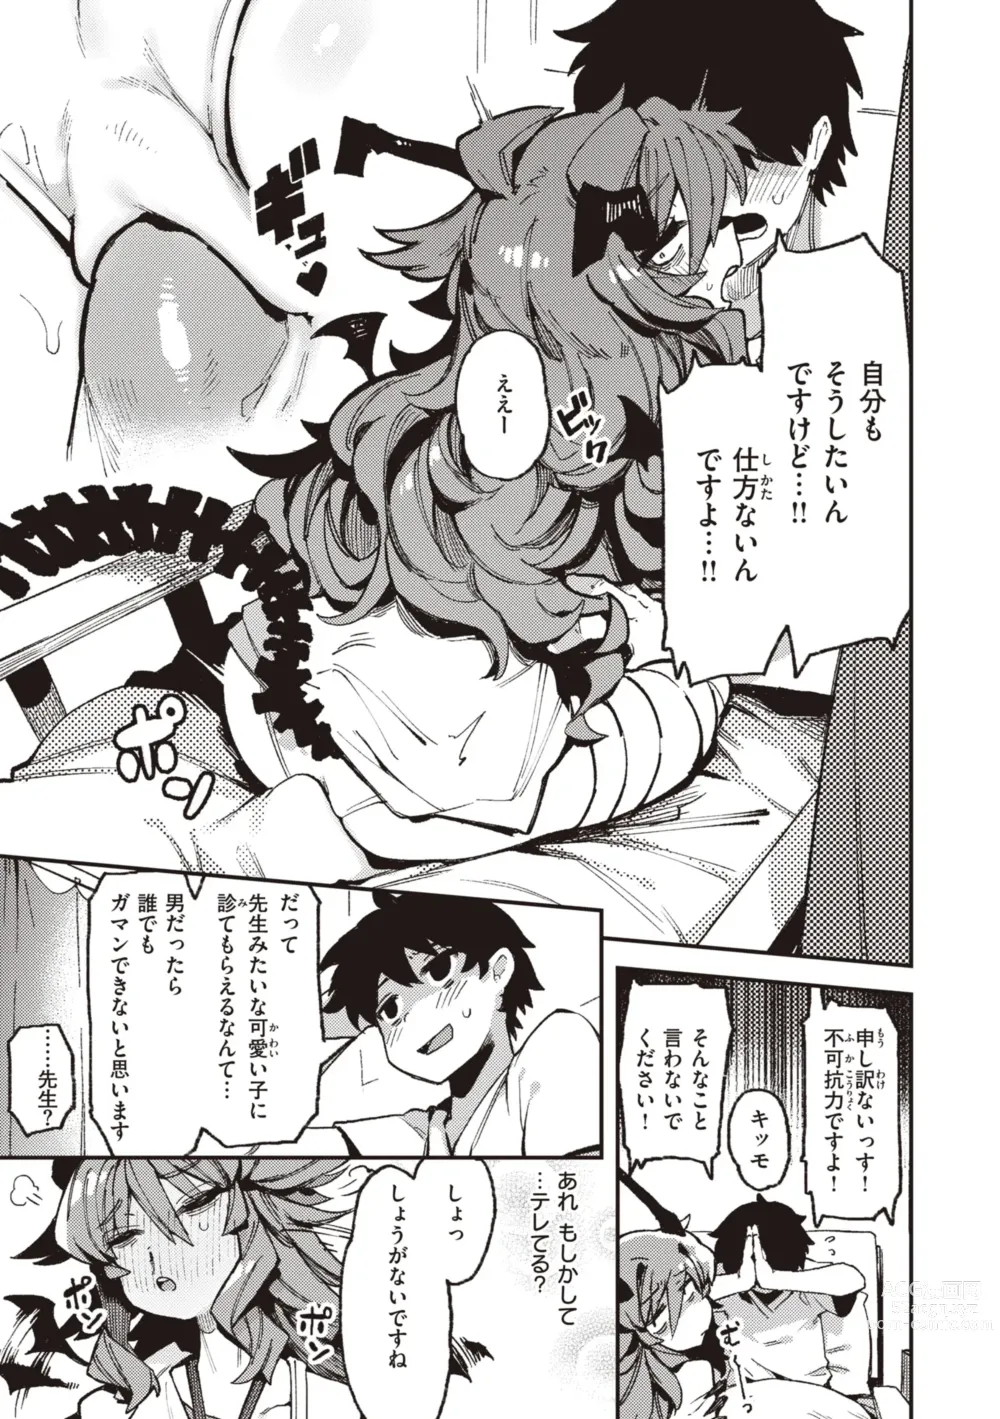 Page 9 of manga Ino Megami-tachi - interspecies venus